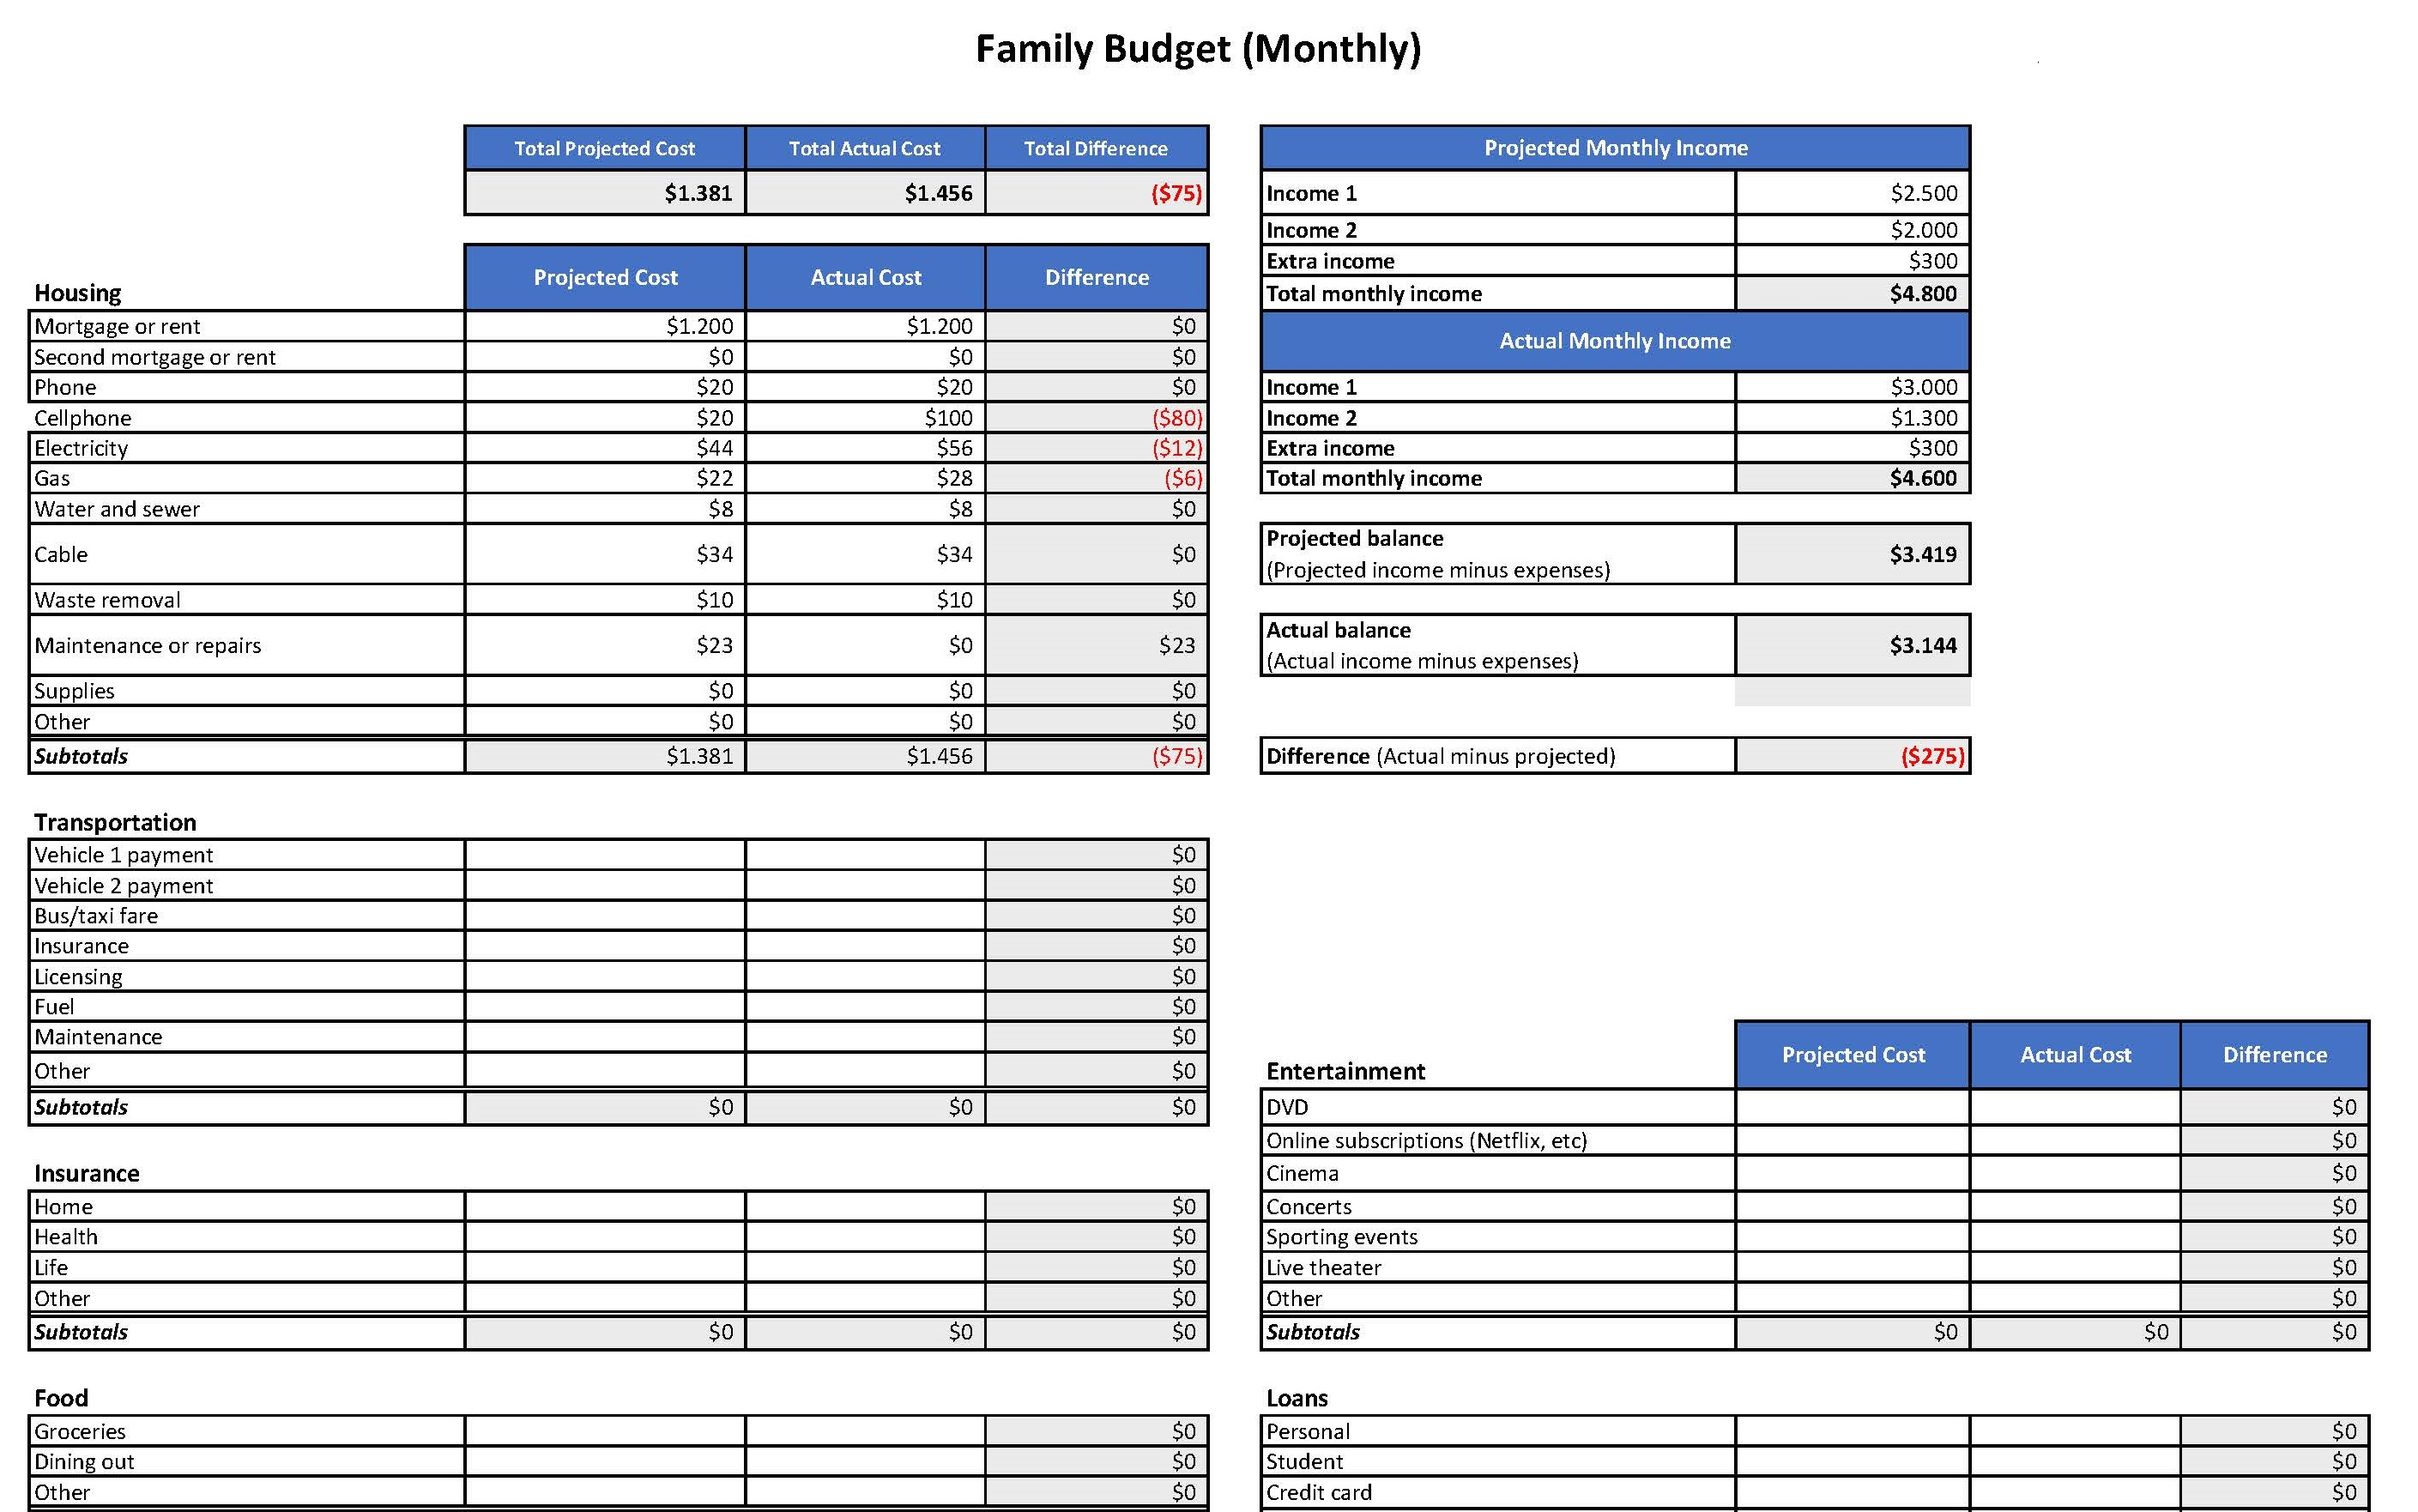 Family Budget Spreadsheet Usd | Templates At Allbusinesstemplates Inside Family Budget Spreadsheet